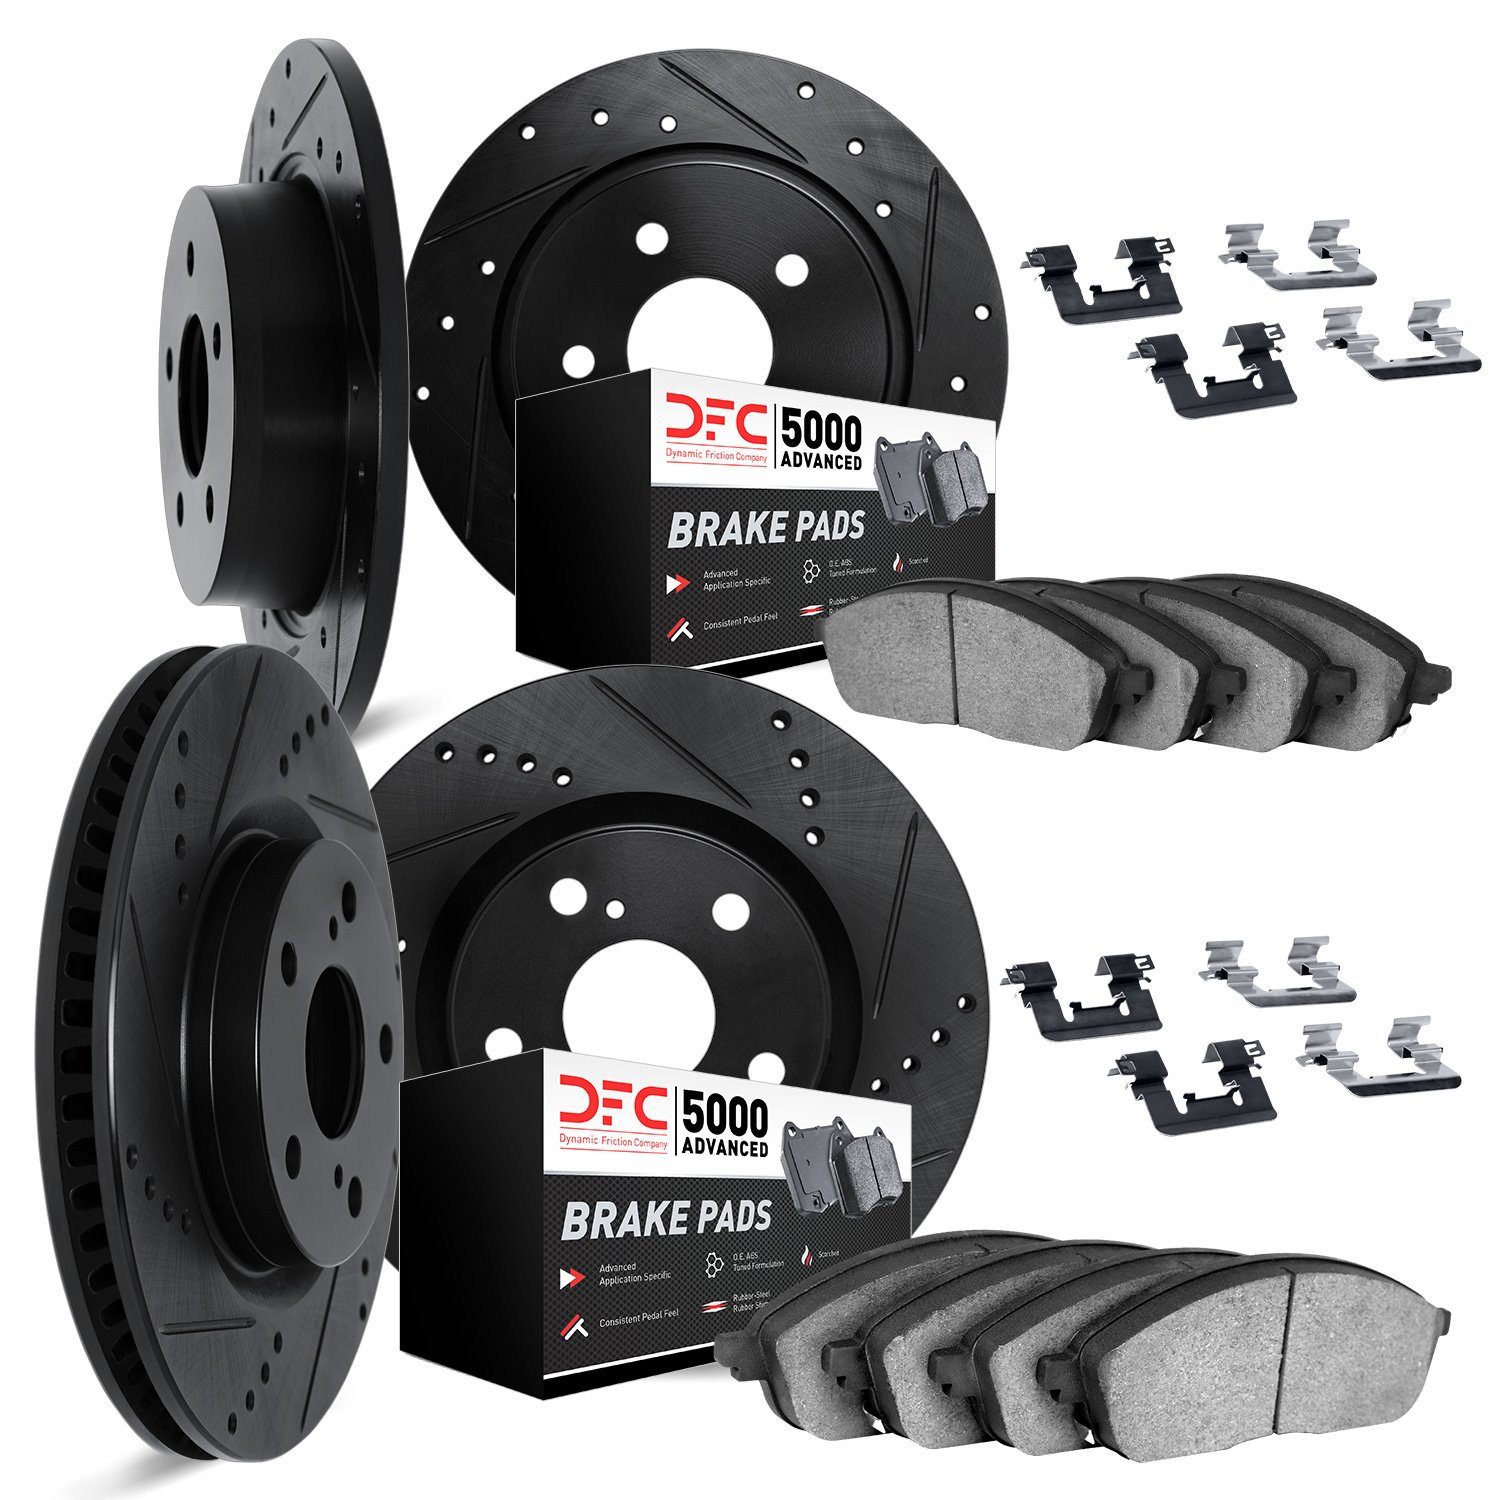 8514-76179 Drilled/Slotted Brake Rotors w/5000 Advanced Brake Pads Kit & Hardware [Black], Fits Select Lexus/Toyota/Scion, Posit